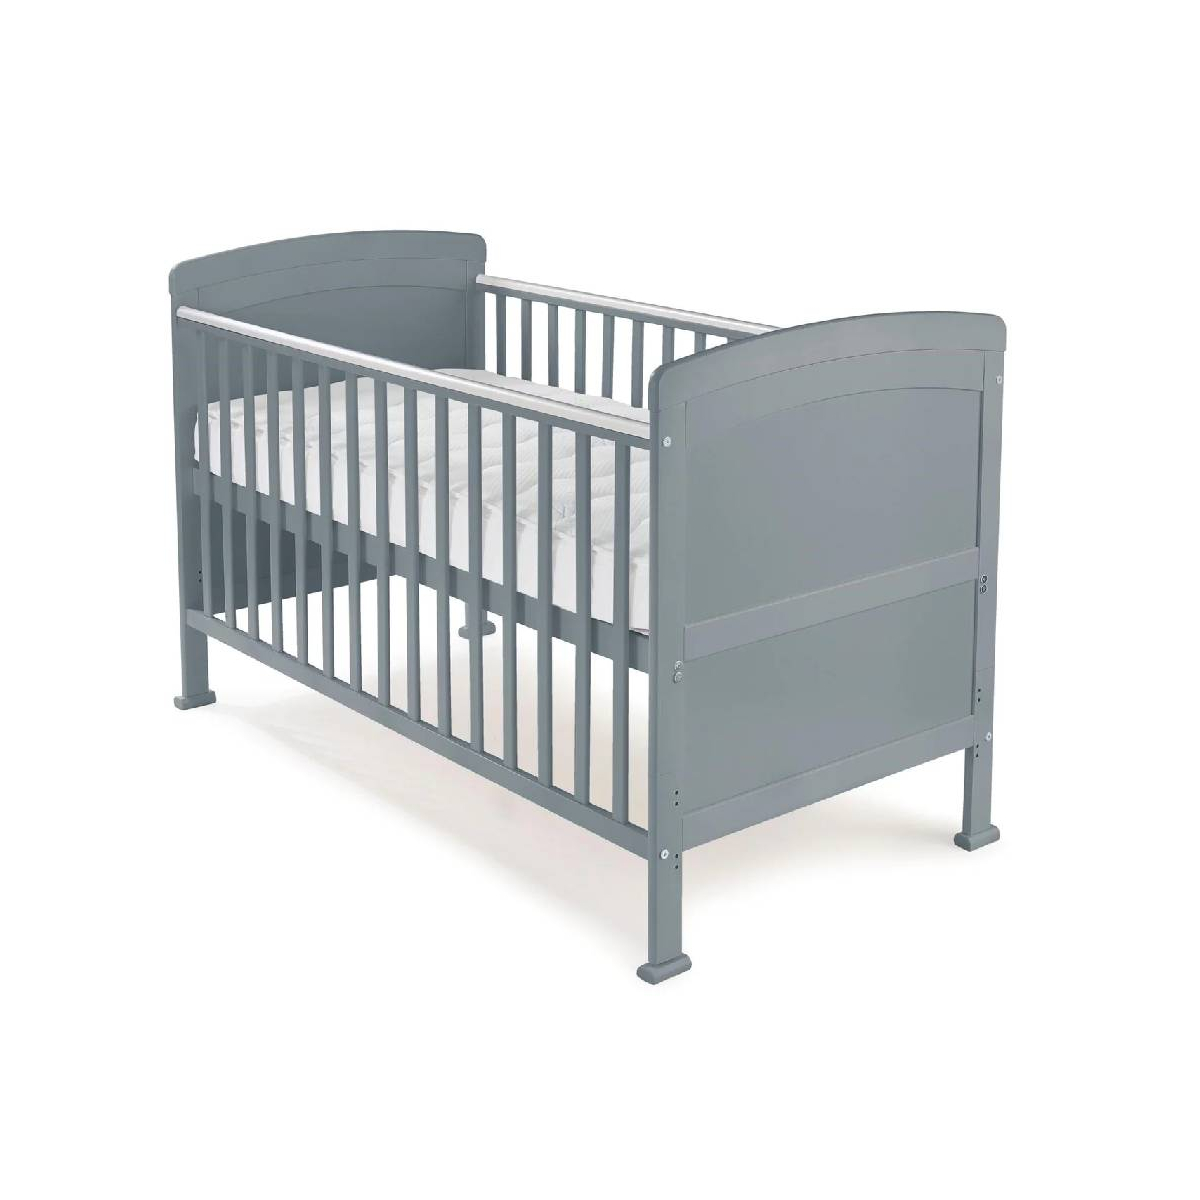 Aya Penelope Cot Bed/Toddler Bed (140 x 70cm)